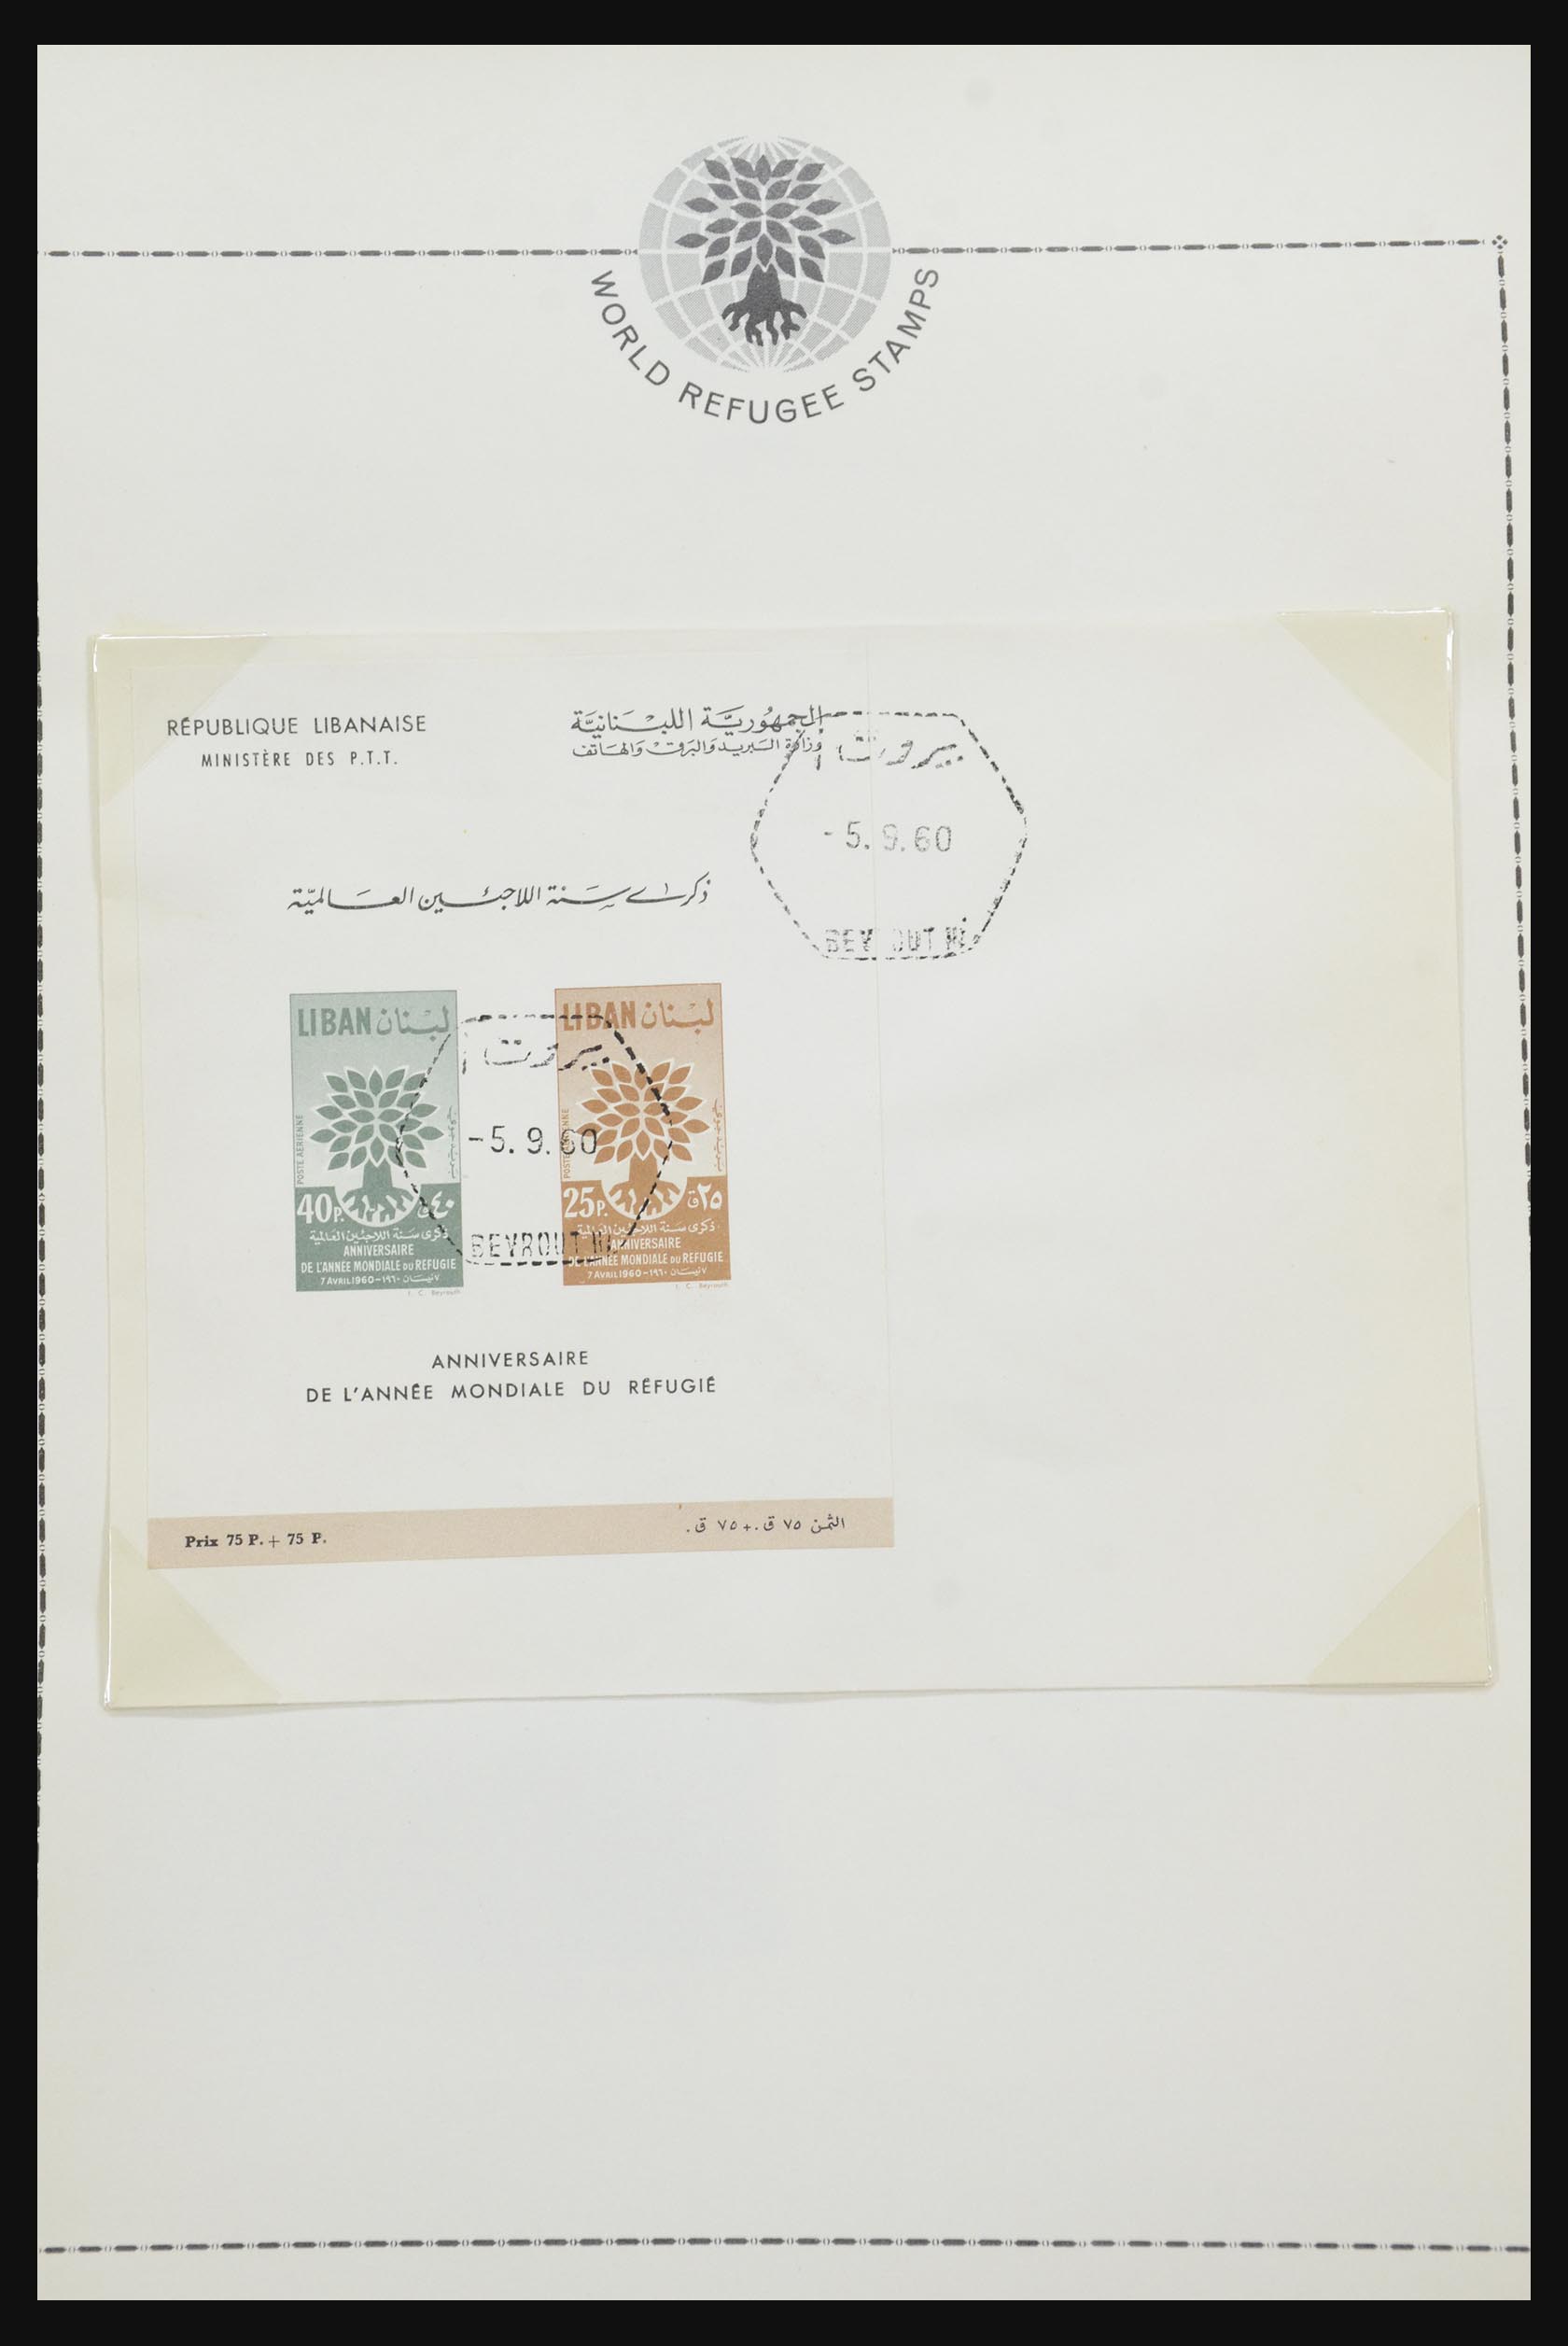 31921 056 - 31921 Diverse motieven op brief 1934-1996.